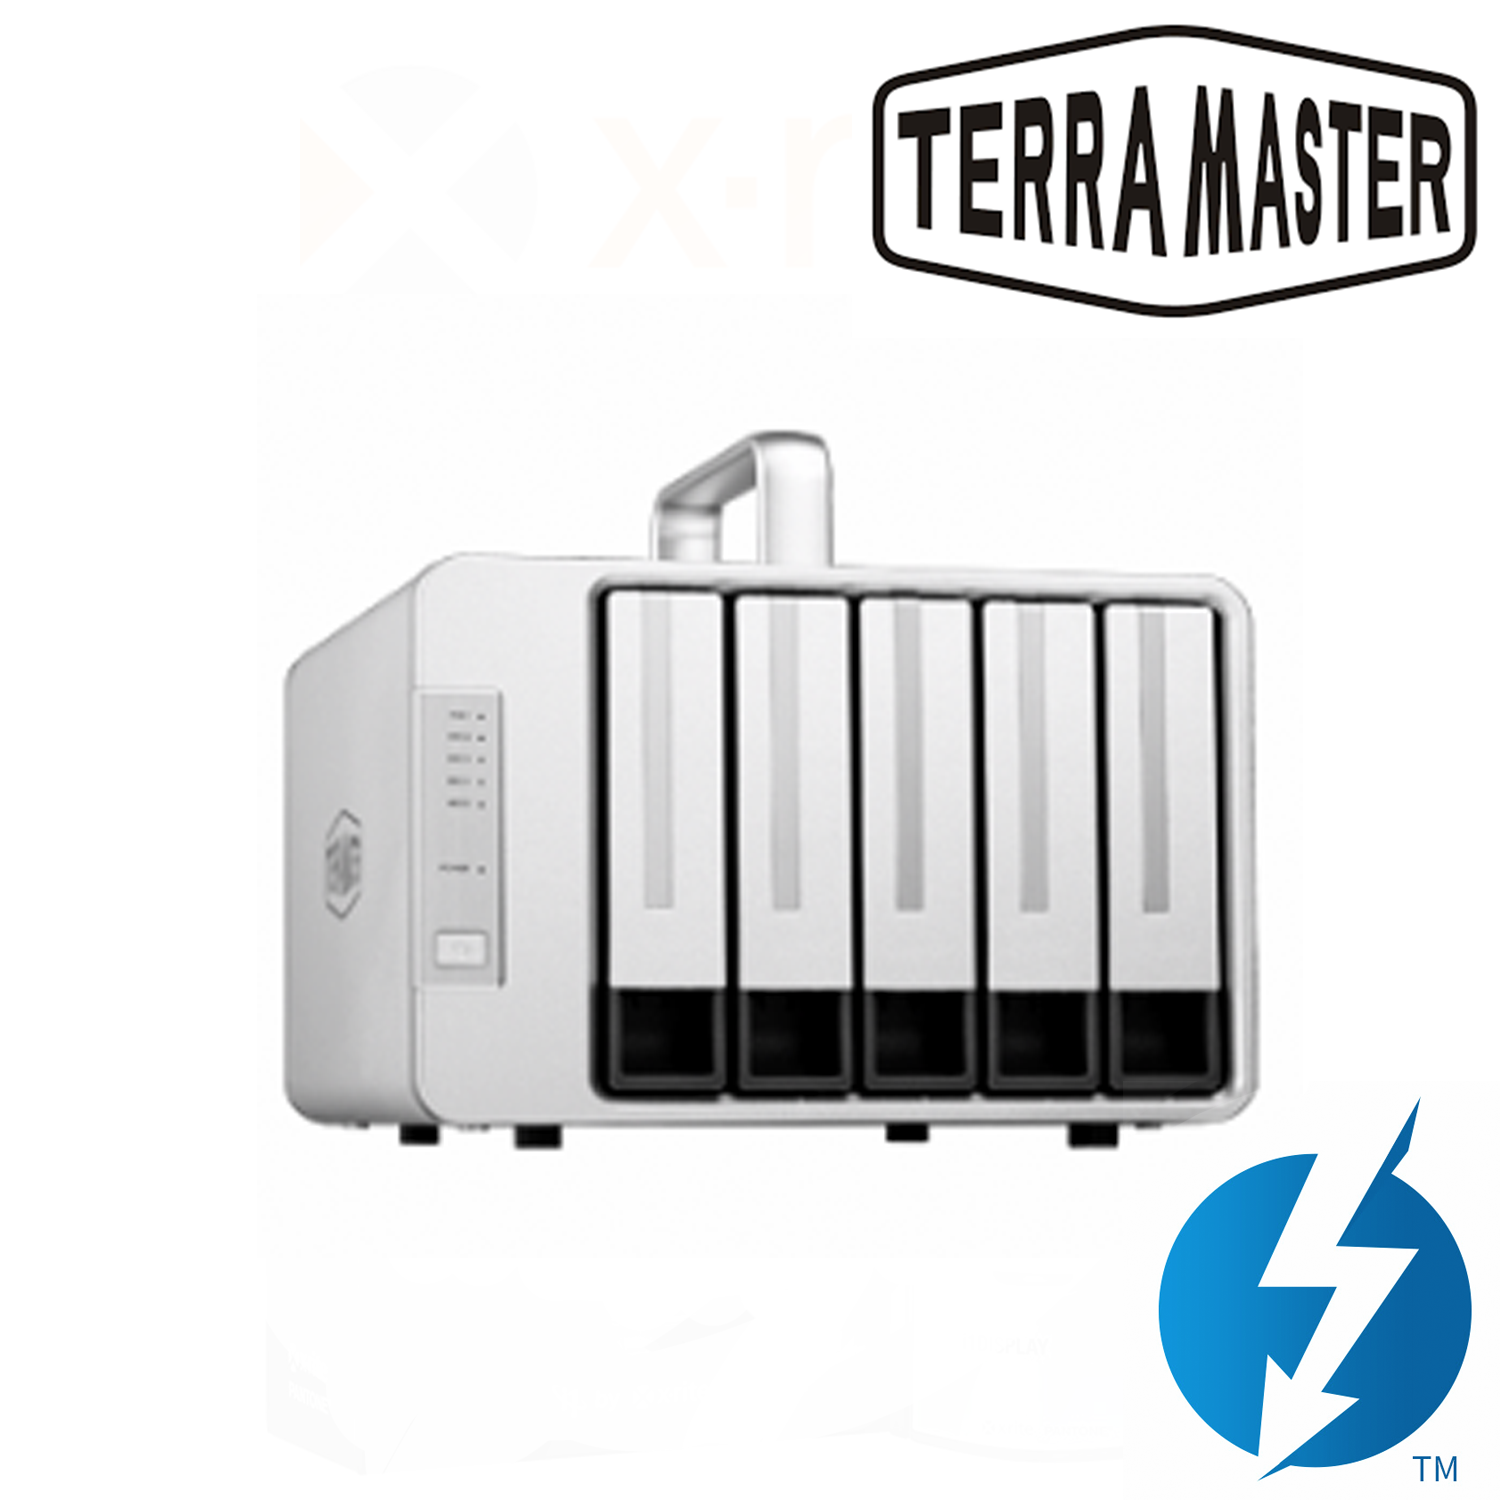 TerraMaster - Boitier RAID, 5 HDD/SSD - Sata 6 Gbps - Thunderbolt 3